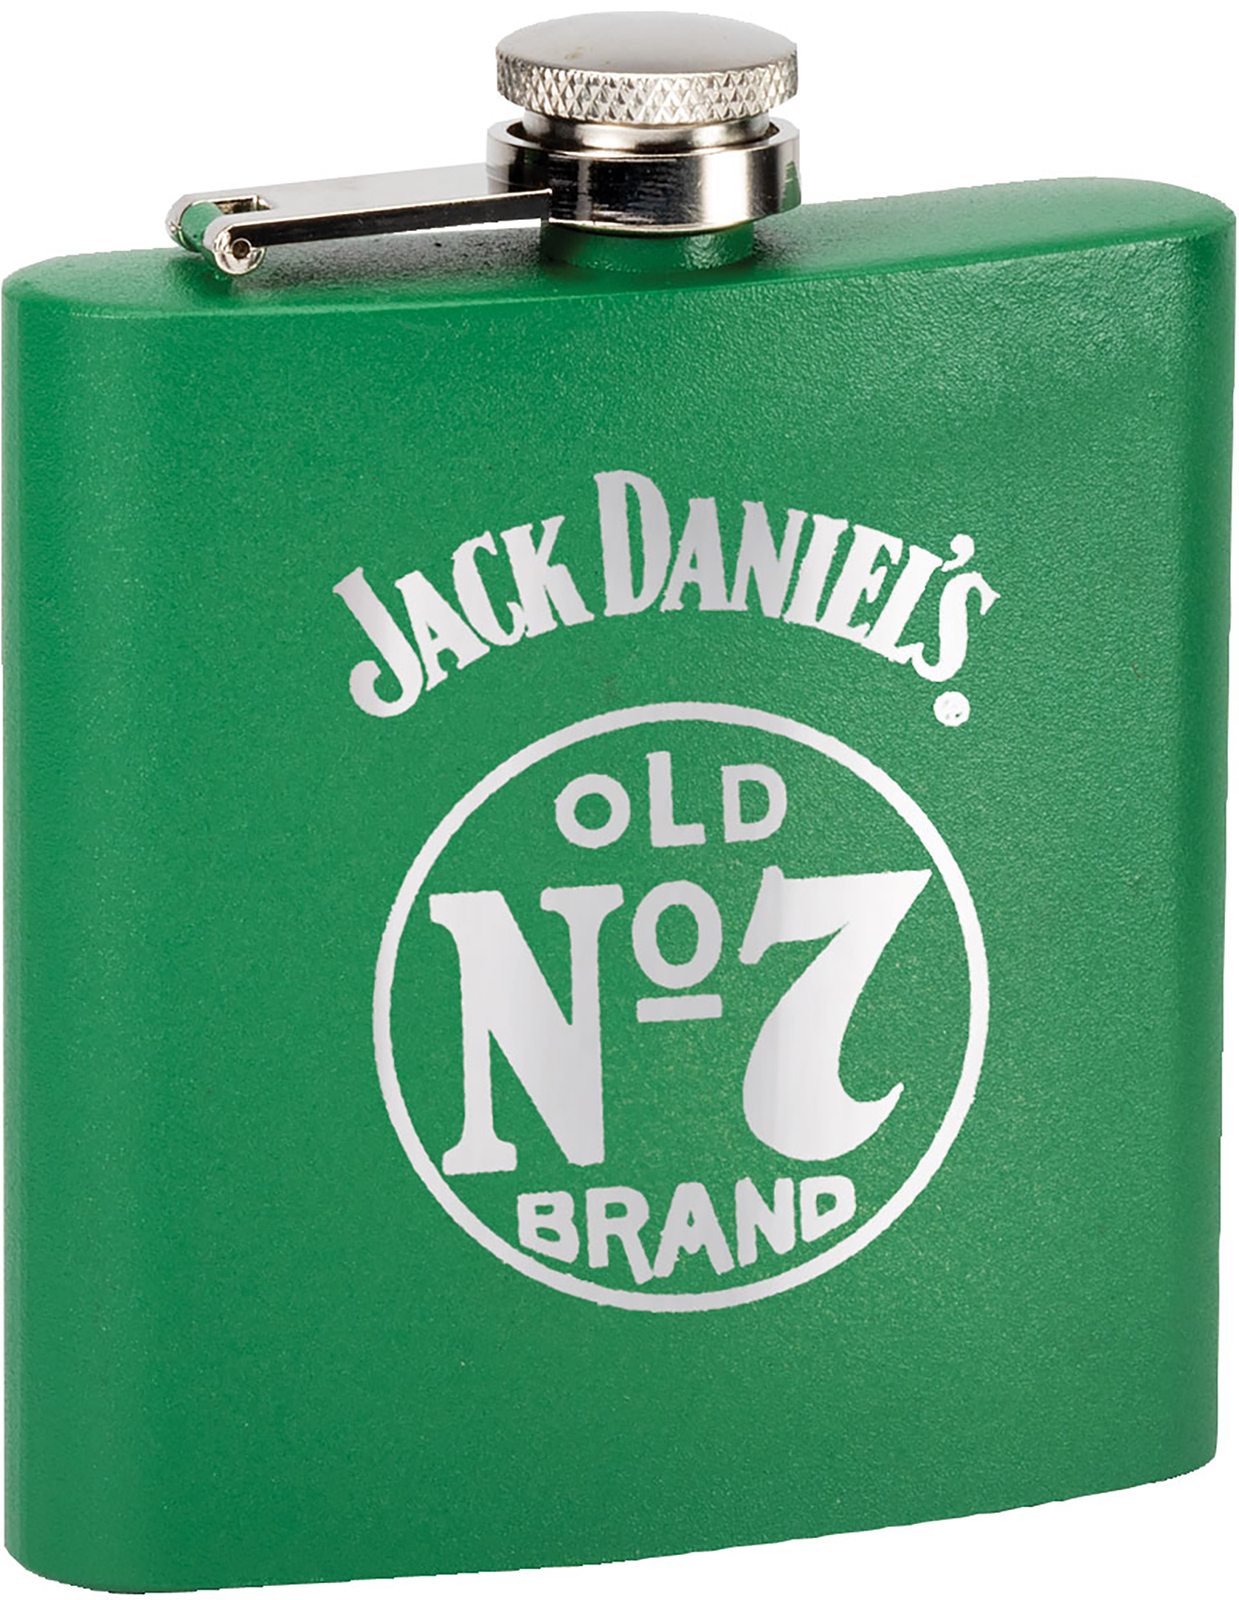 Tahoe© Powder Coated Insulated 6 oz Flask - Green